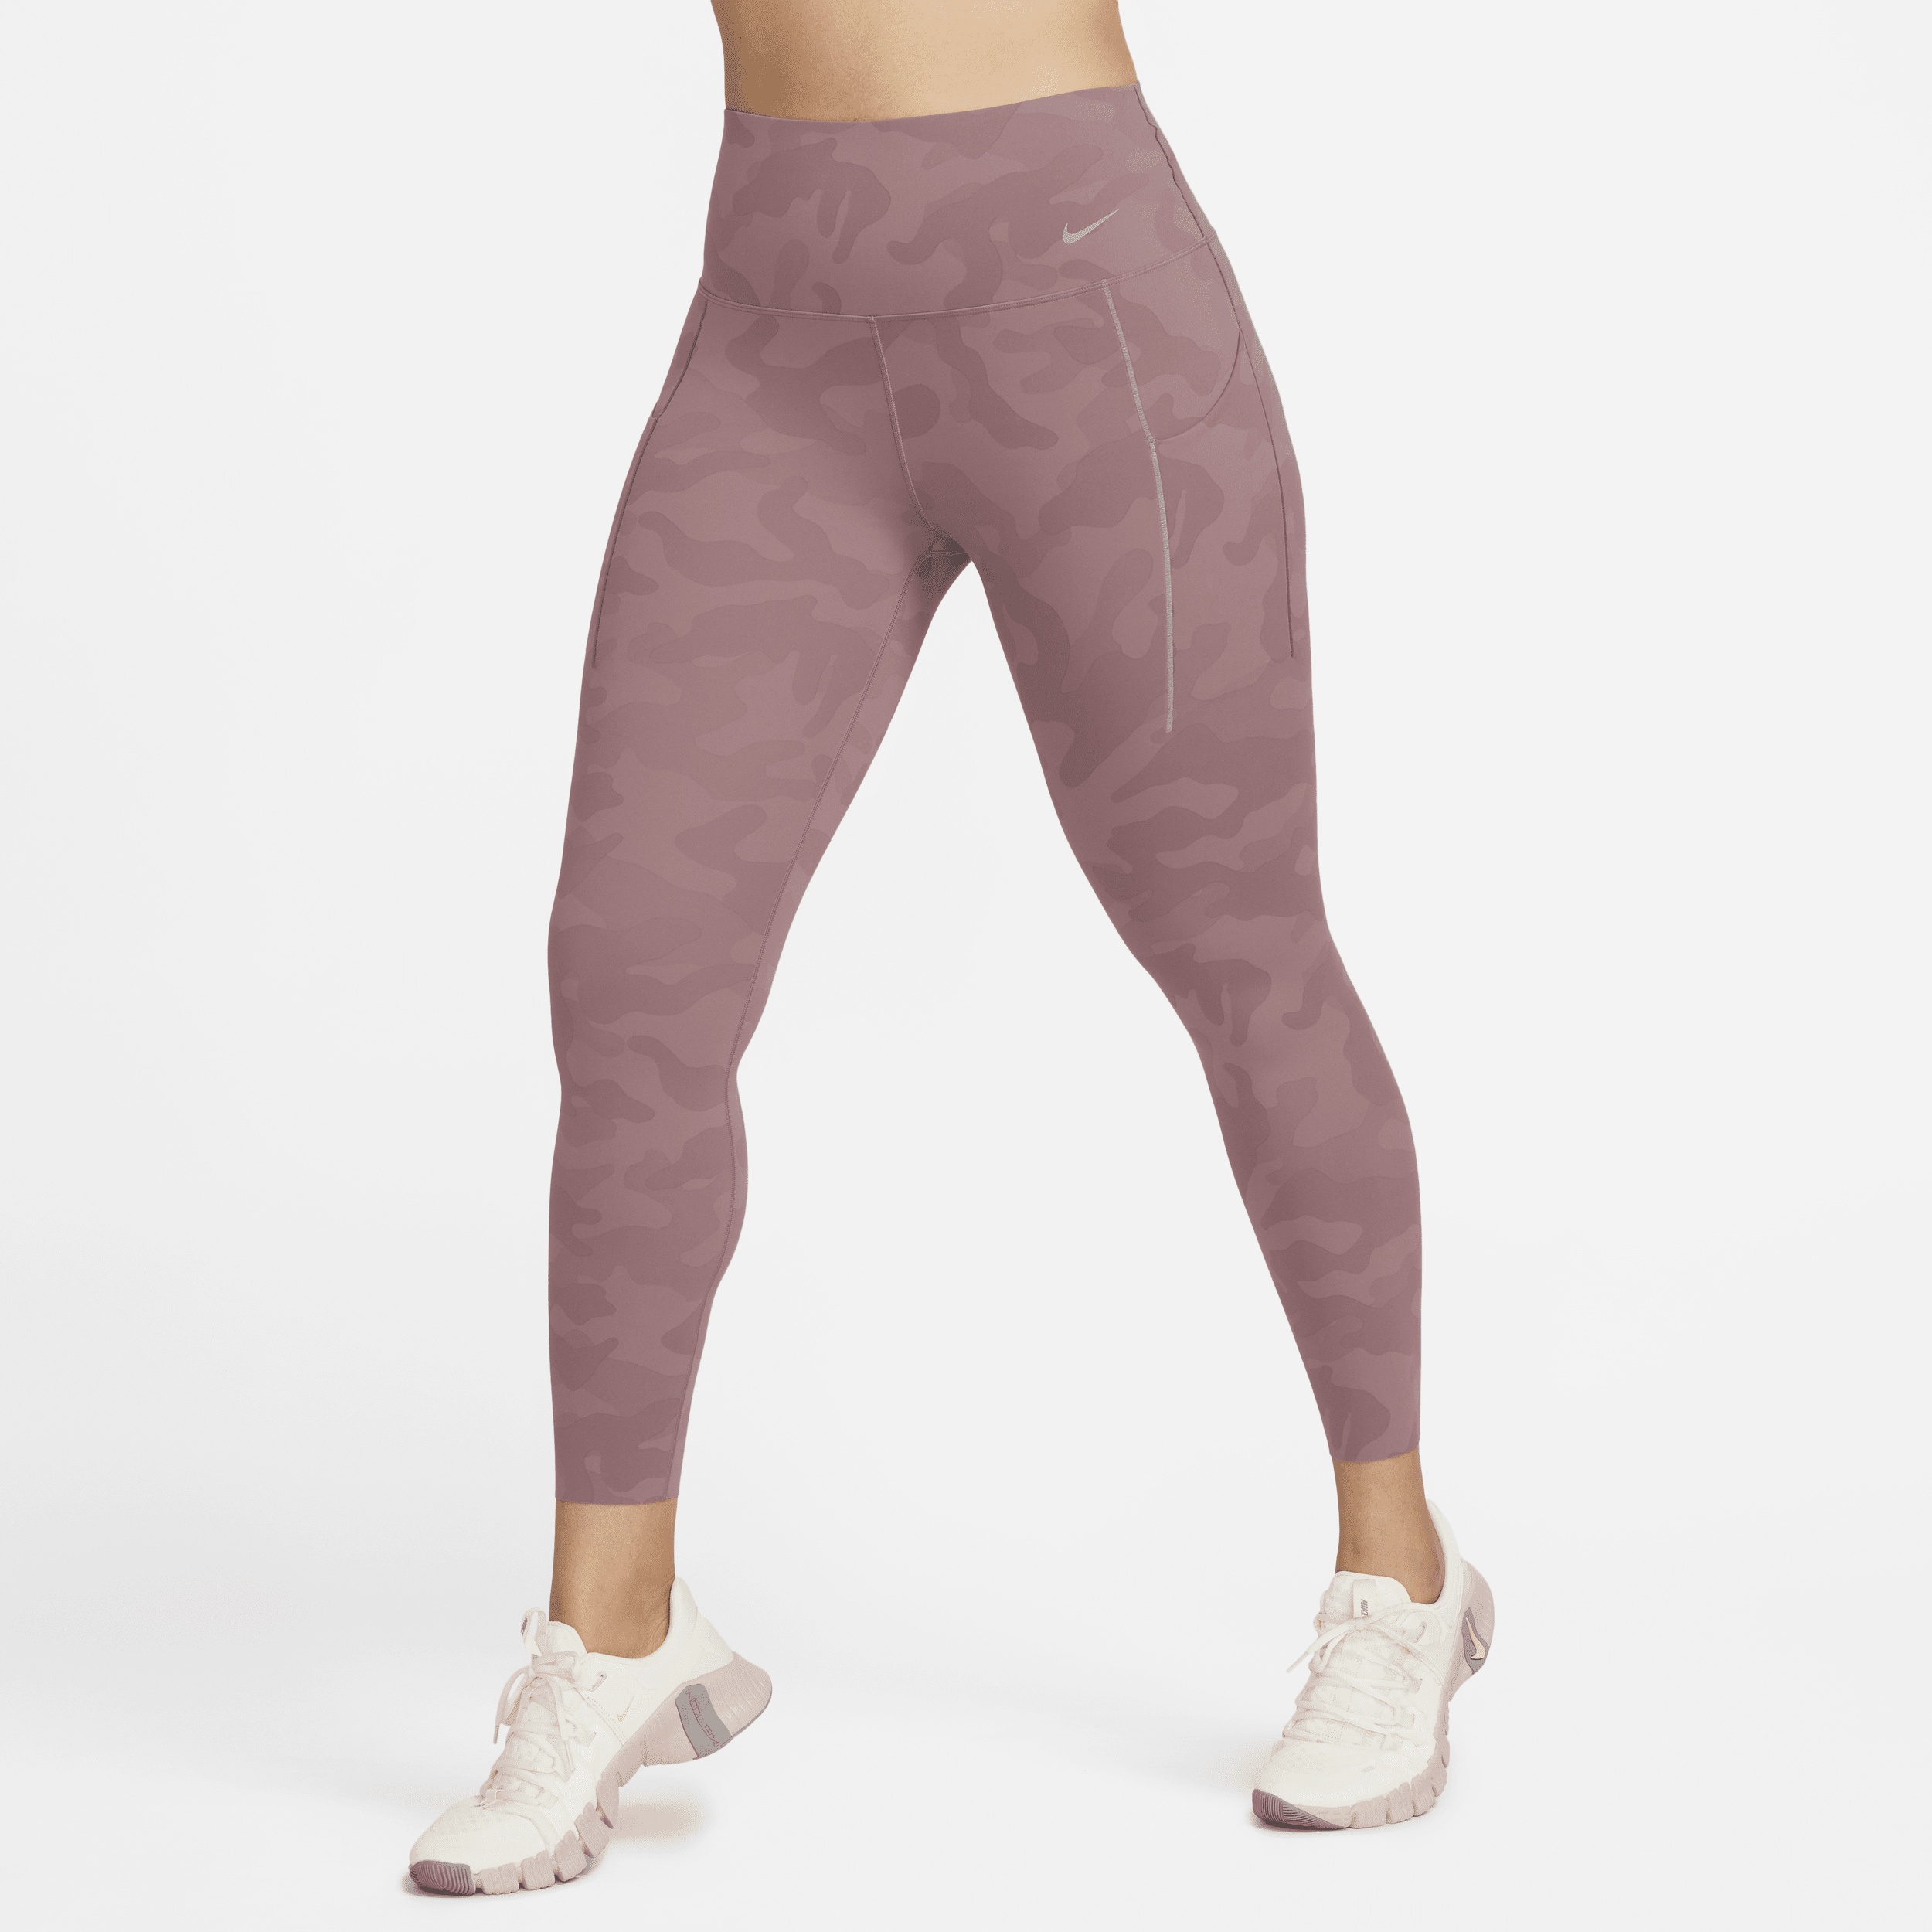 Nike Women's Universa Medium-Support High-Waisted 7/8 Camo Leggings with Pockets - 1